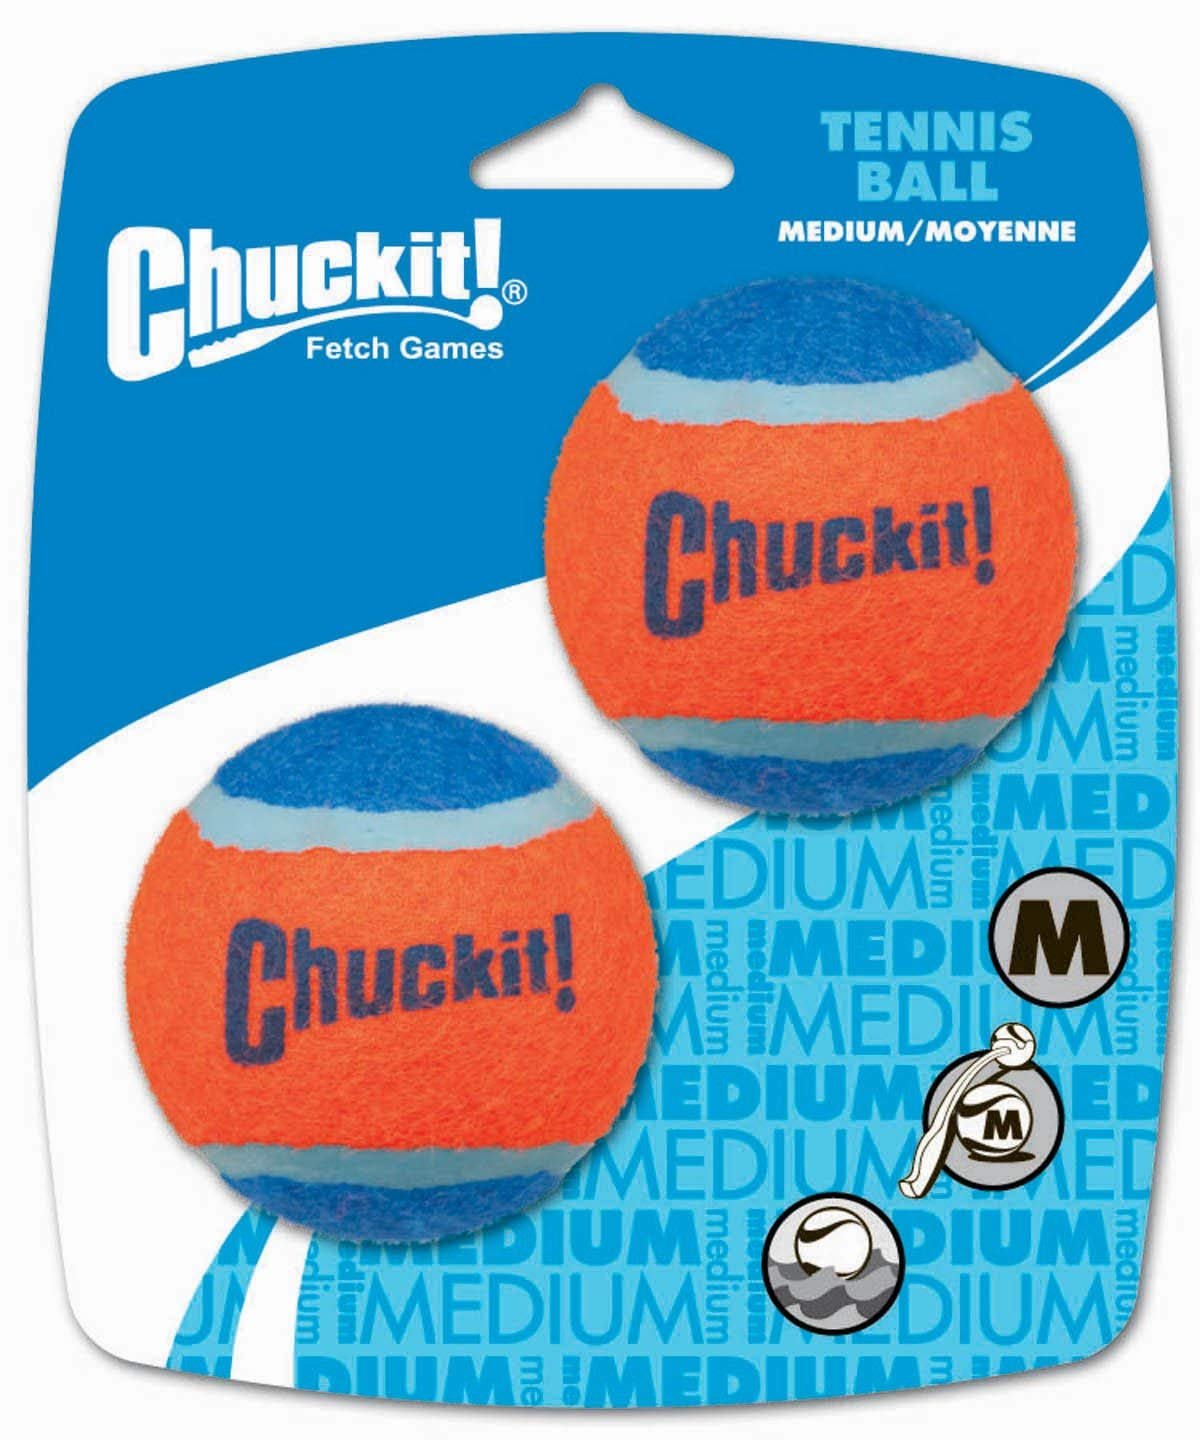 Chuckit! Tennis Ball, Medium, 8 Pack - 5